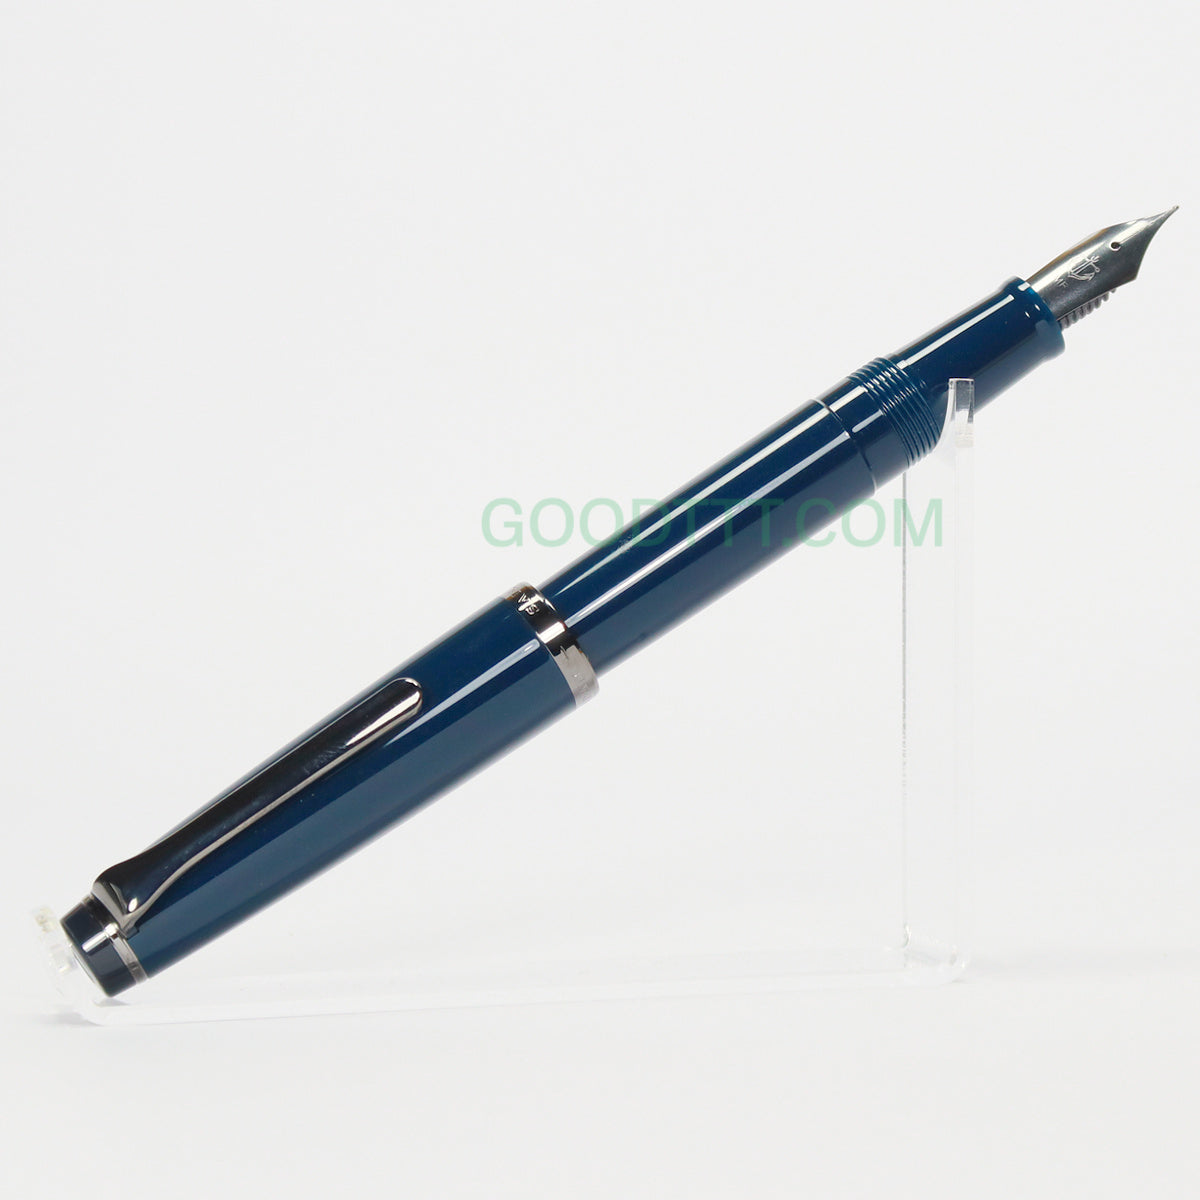 Sailor Lecoule Fountain Pen - Iron Blue Medium Fine Nib